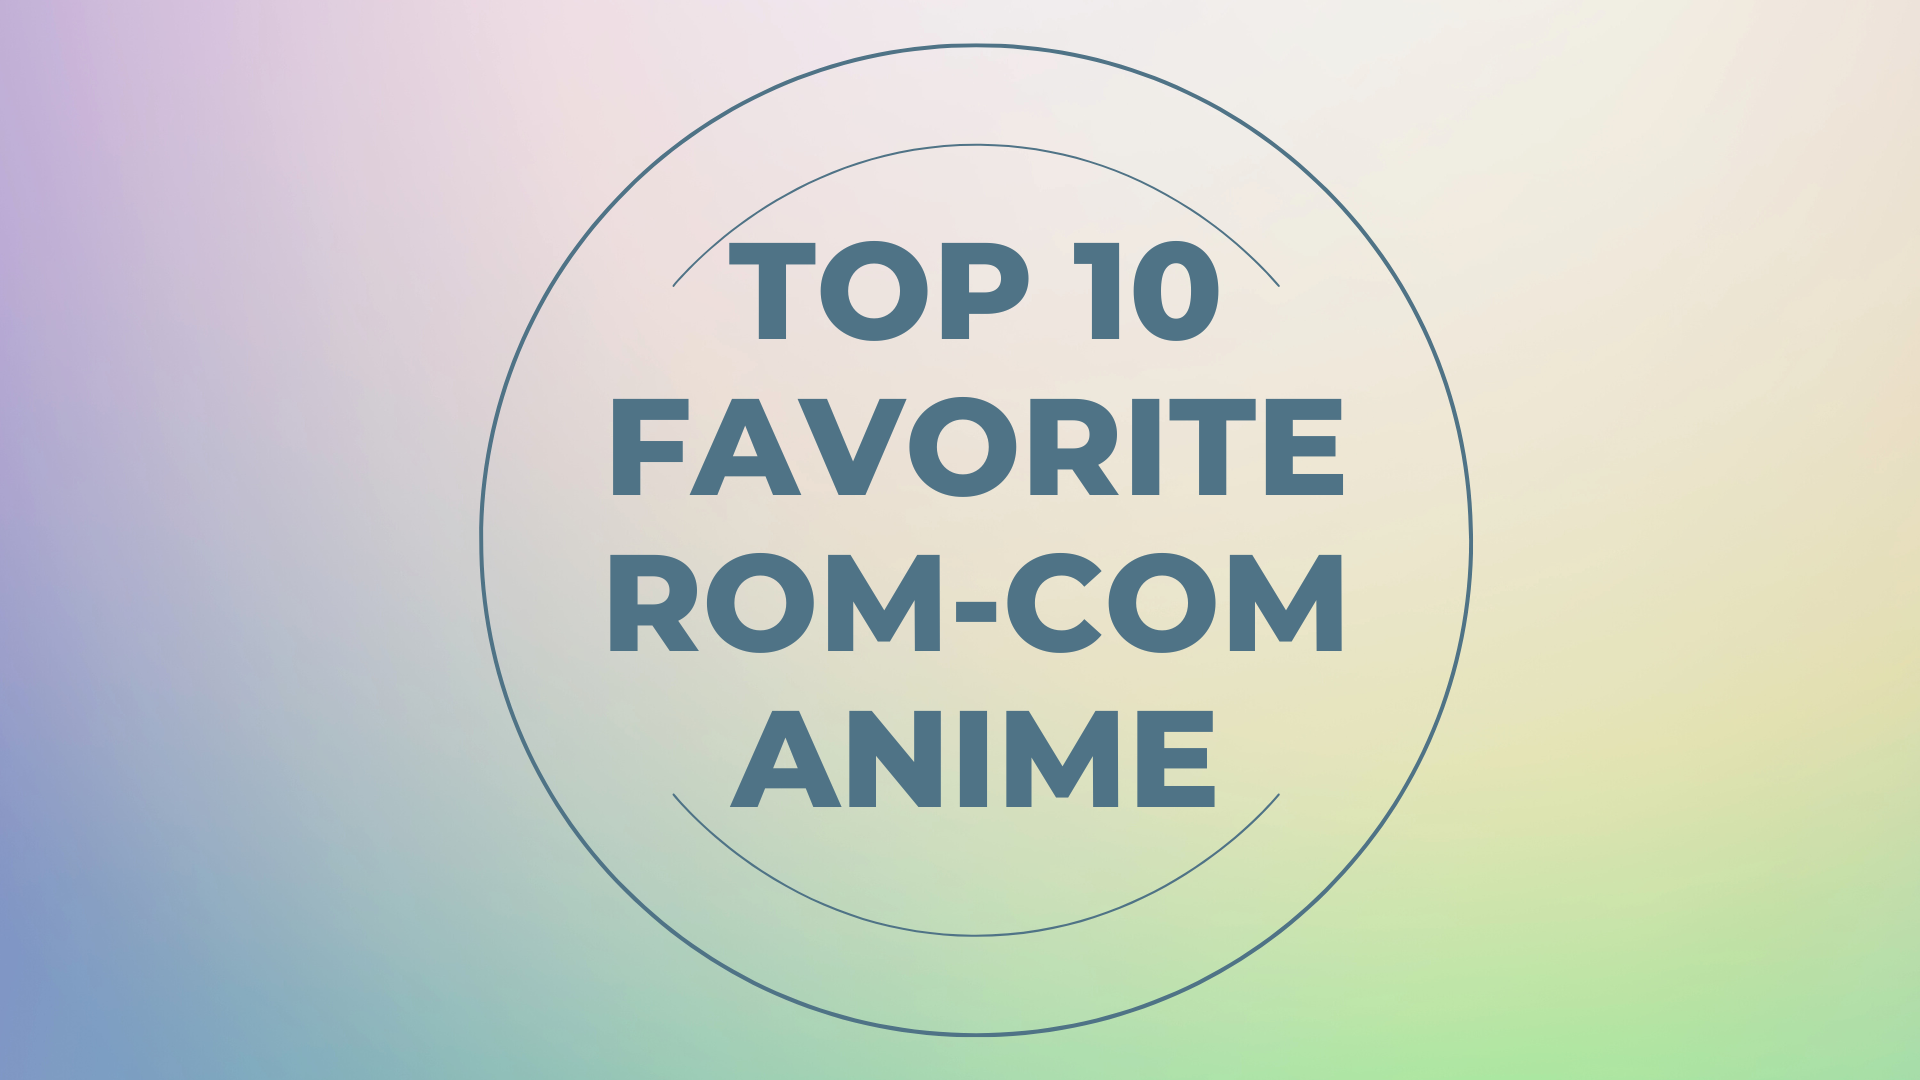 Top 10 Favorite Romantic Comedy Anime